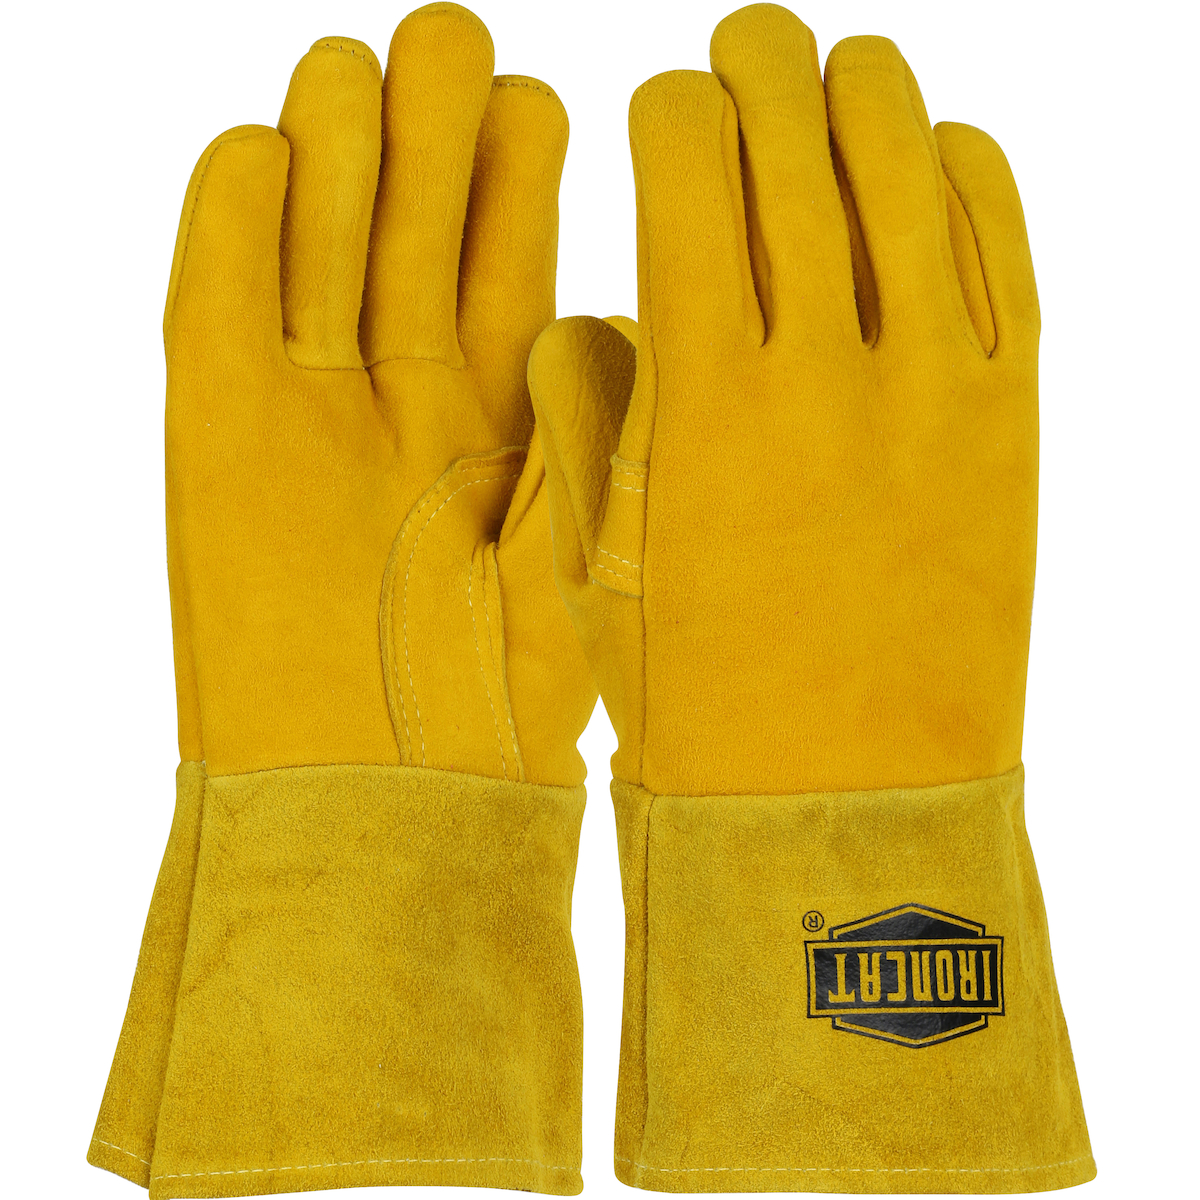 6030 PIP® Ironcat Premium Top Grain Deerskin Leather Mig Welder's Glove with Foam Liner, Kevlar Stitching and 4in Leather Gauntlet Cuff